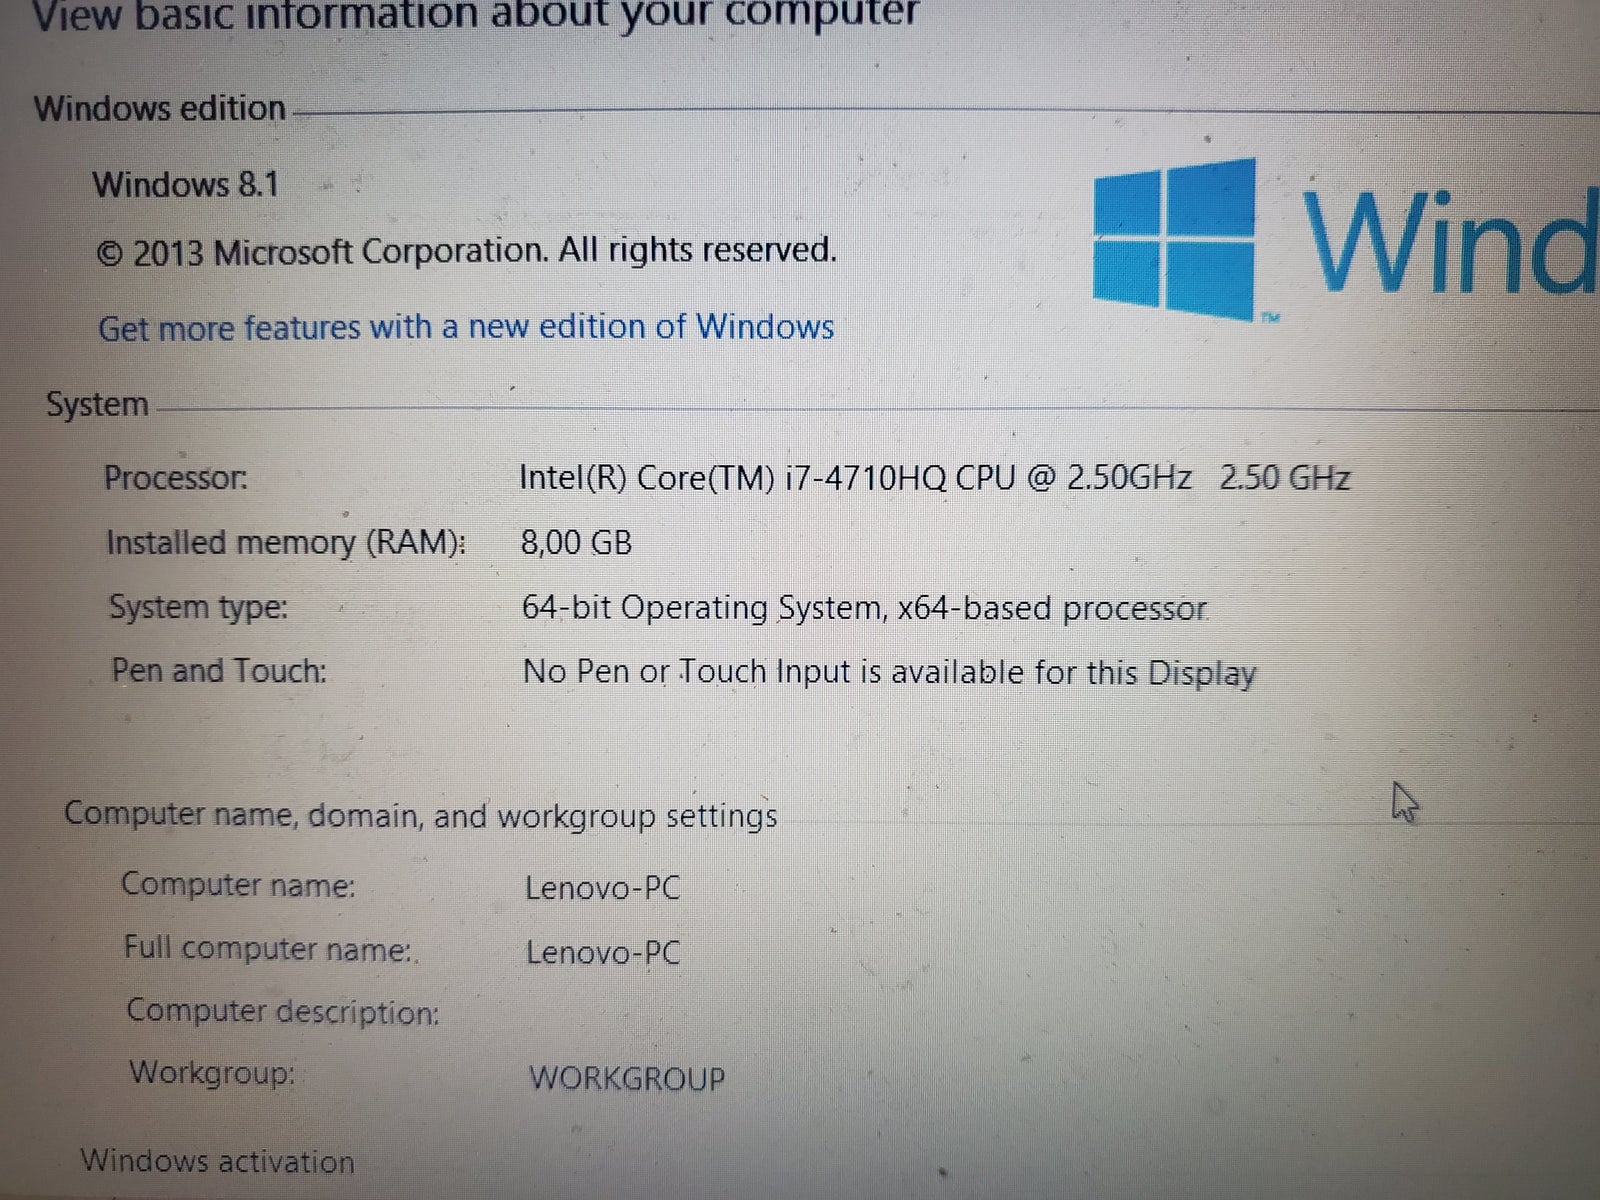 Lenovo Y50-70, 8 GB ram, 1000 GB harddisk